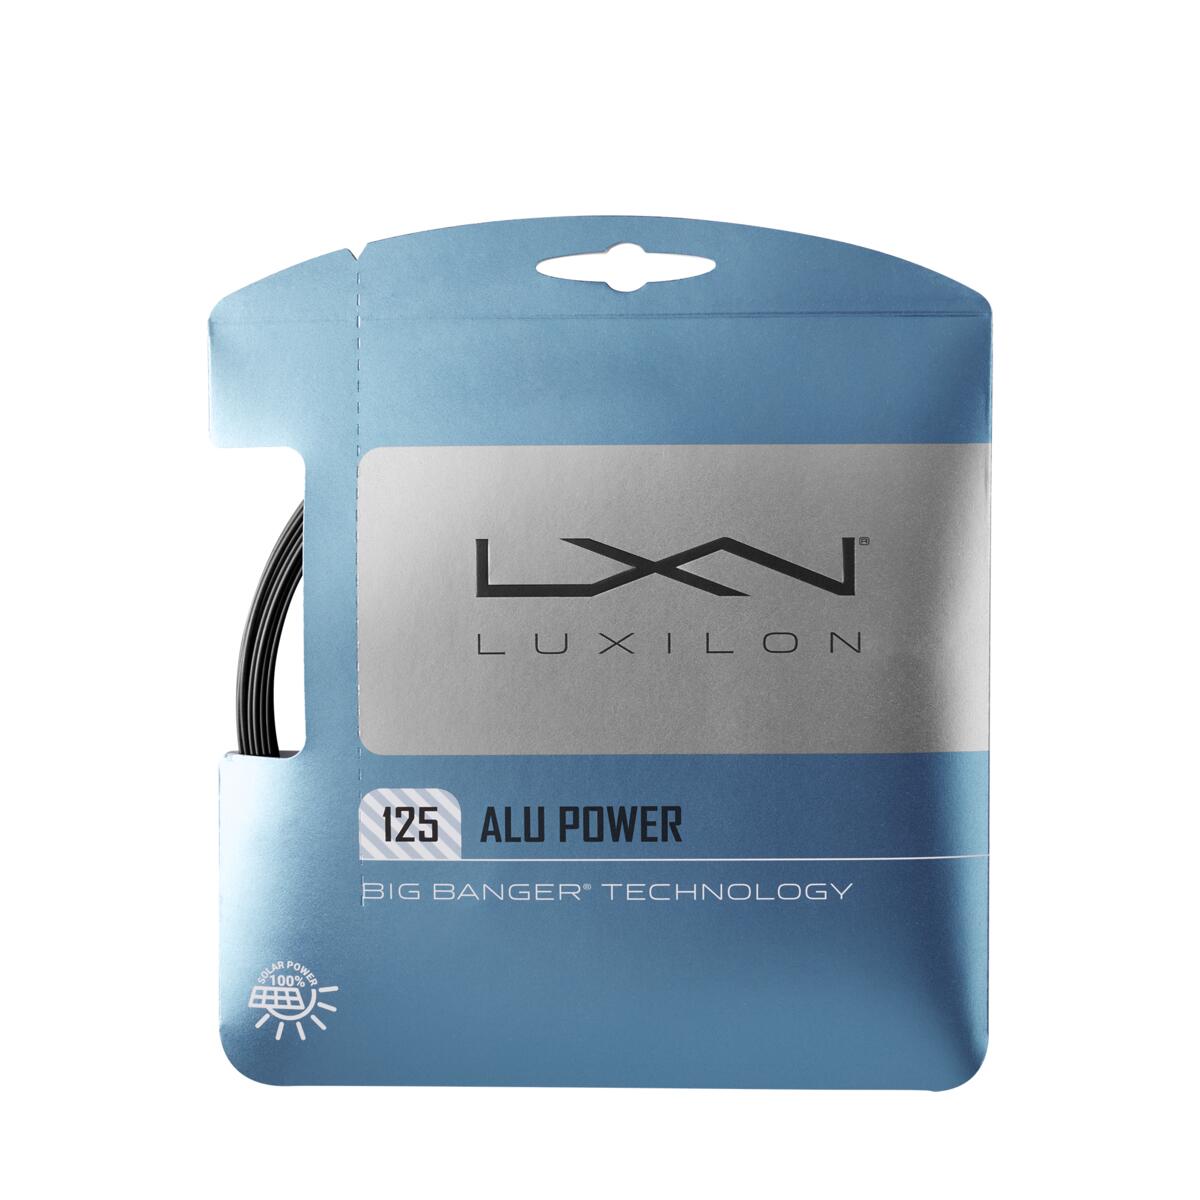 Luxilon Alu Power 125 12m Set - Black